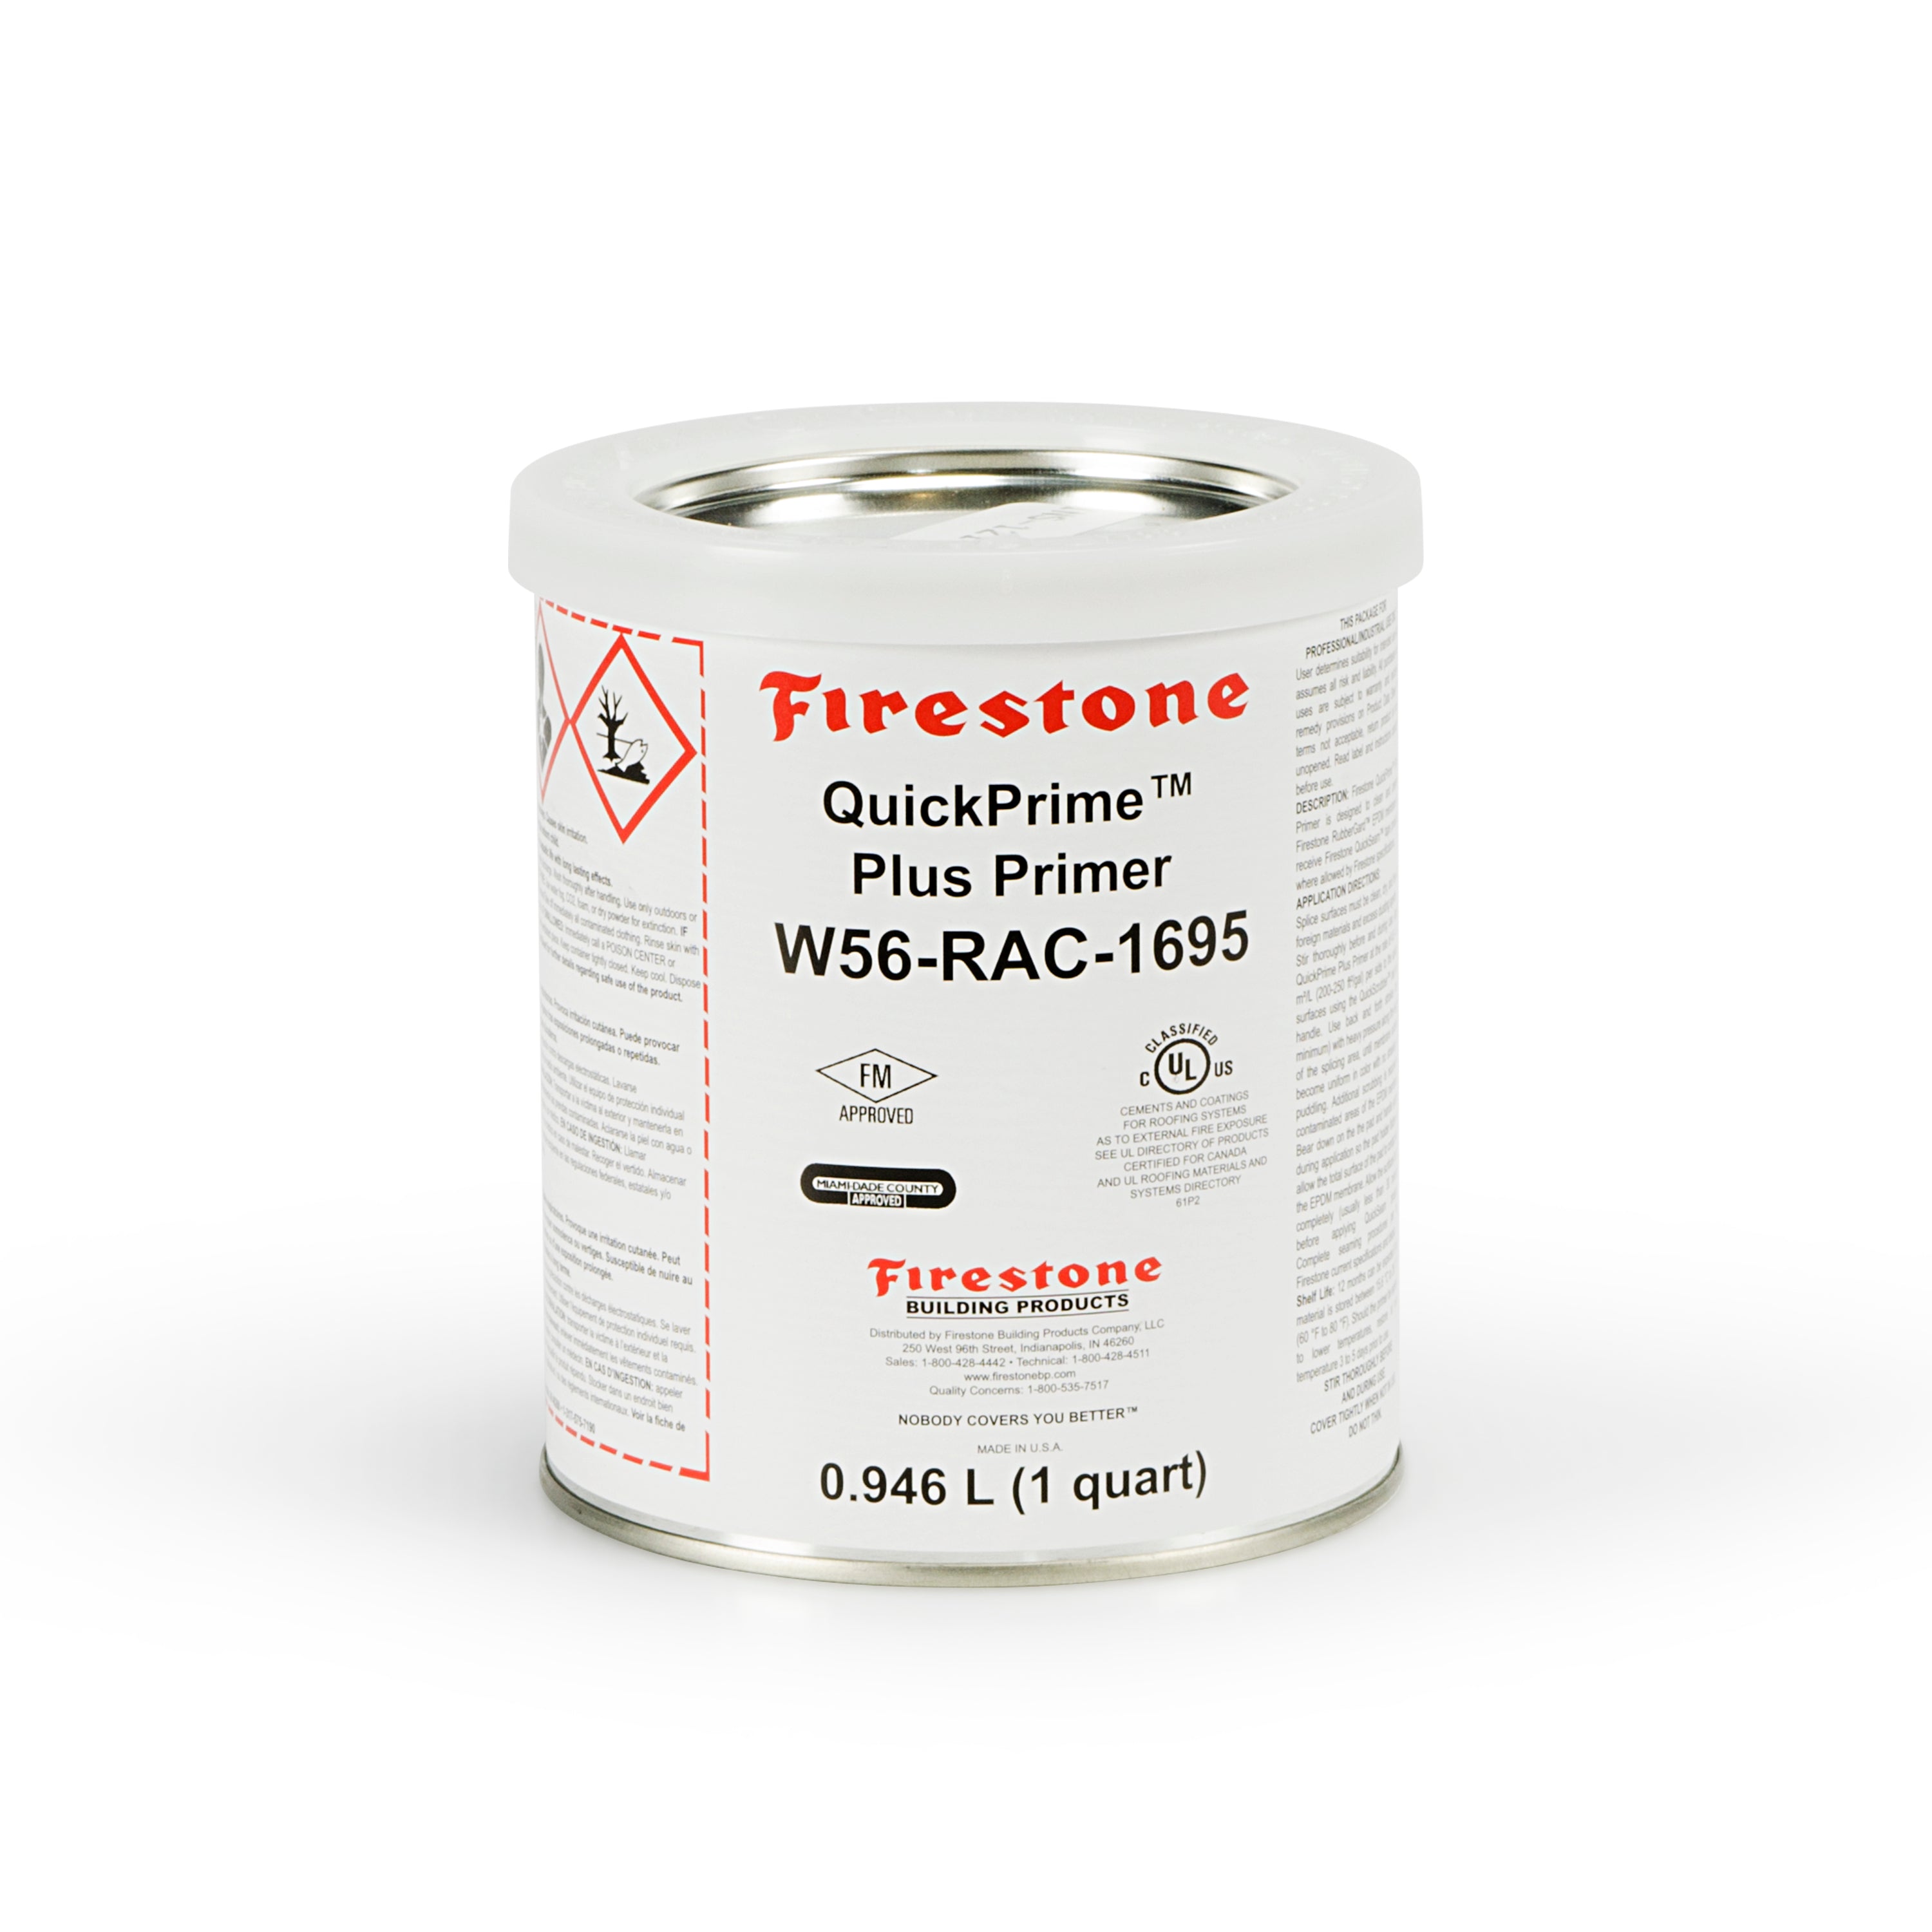 Firestone Quickprime Plus EPDM Liner Seaming Tape Primer